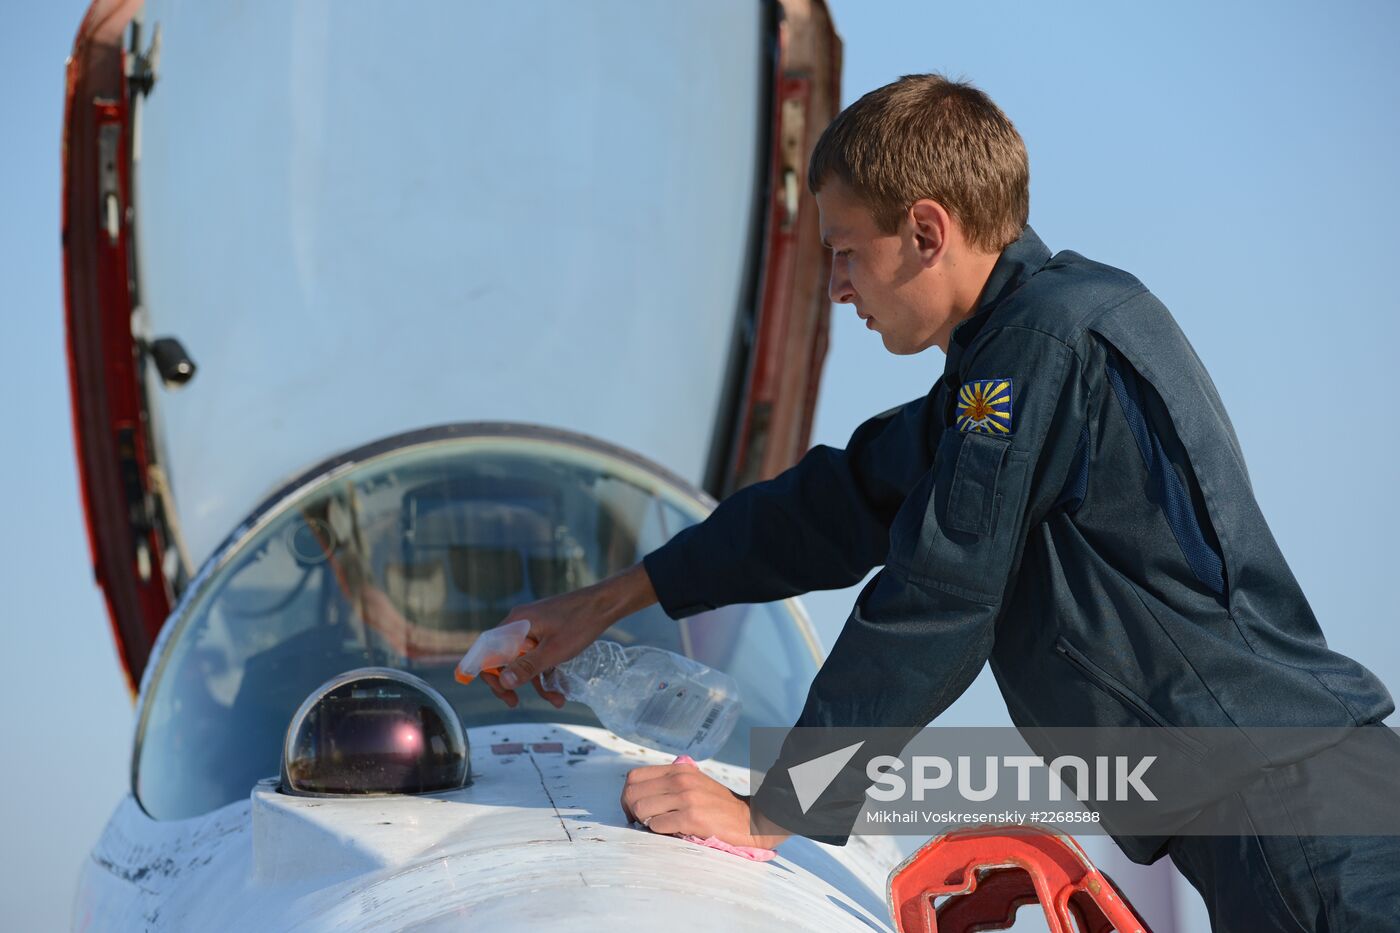 Crews in training for MAKS-2013 international air show